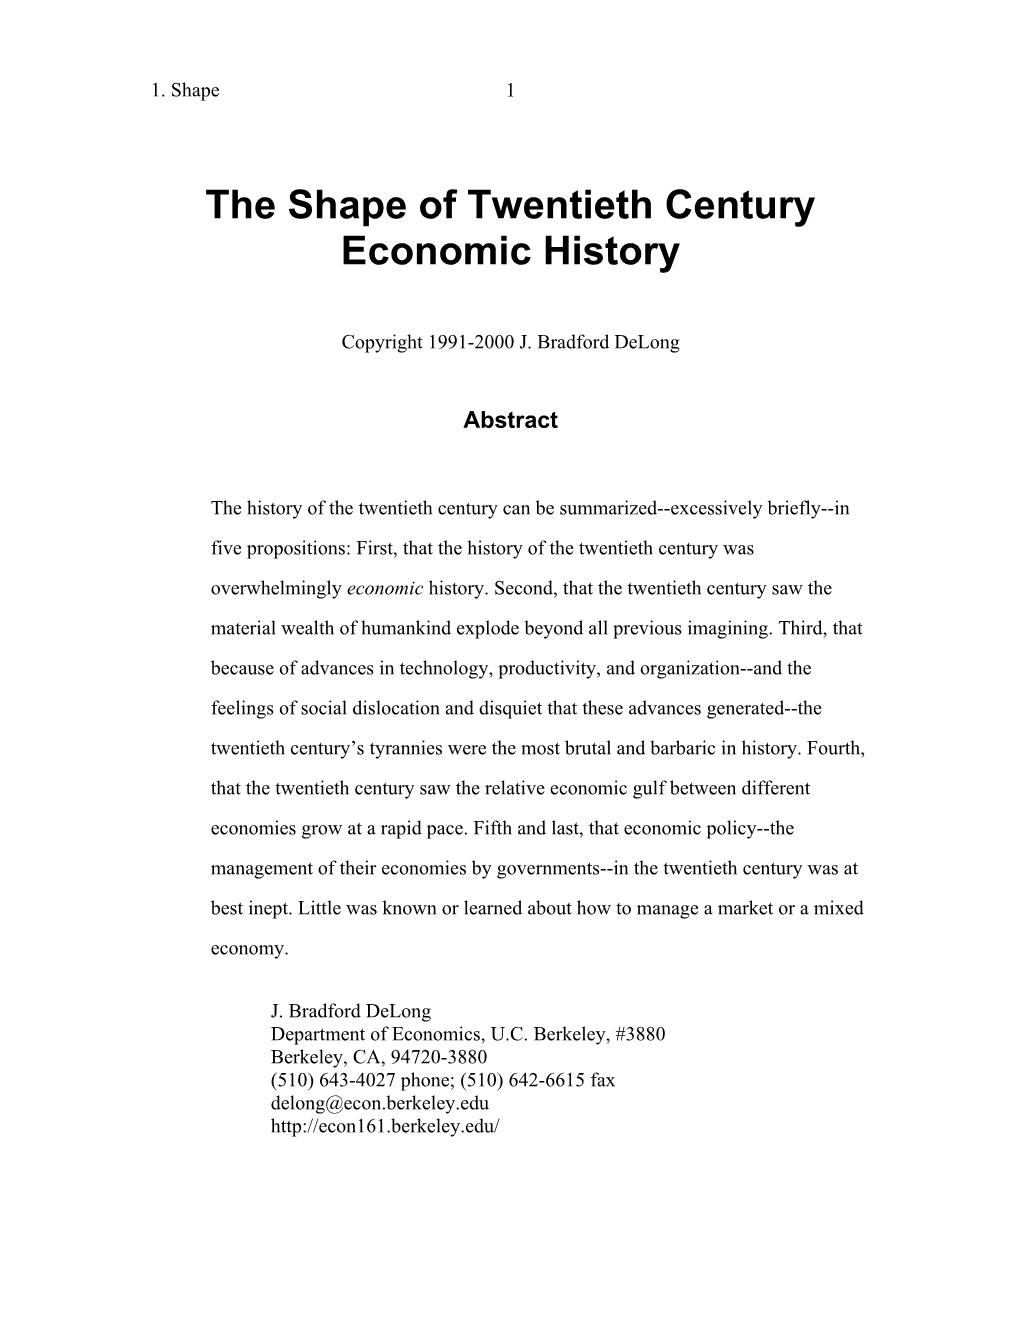 The Shape of Twentieth Century Economic History